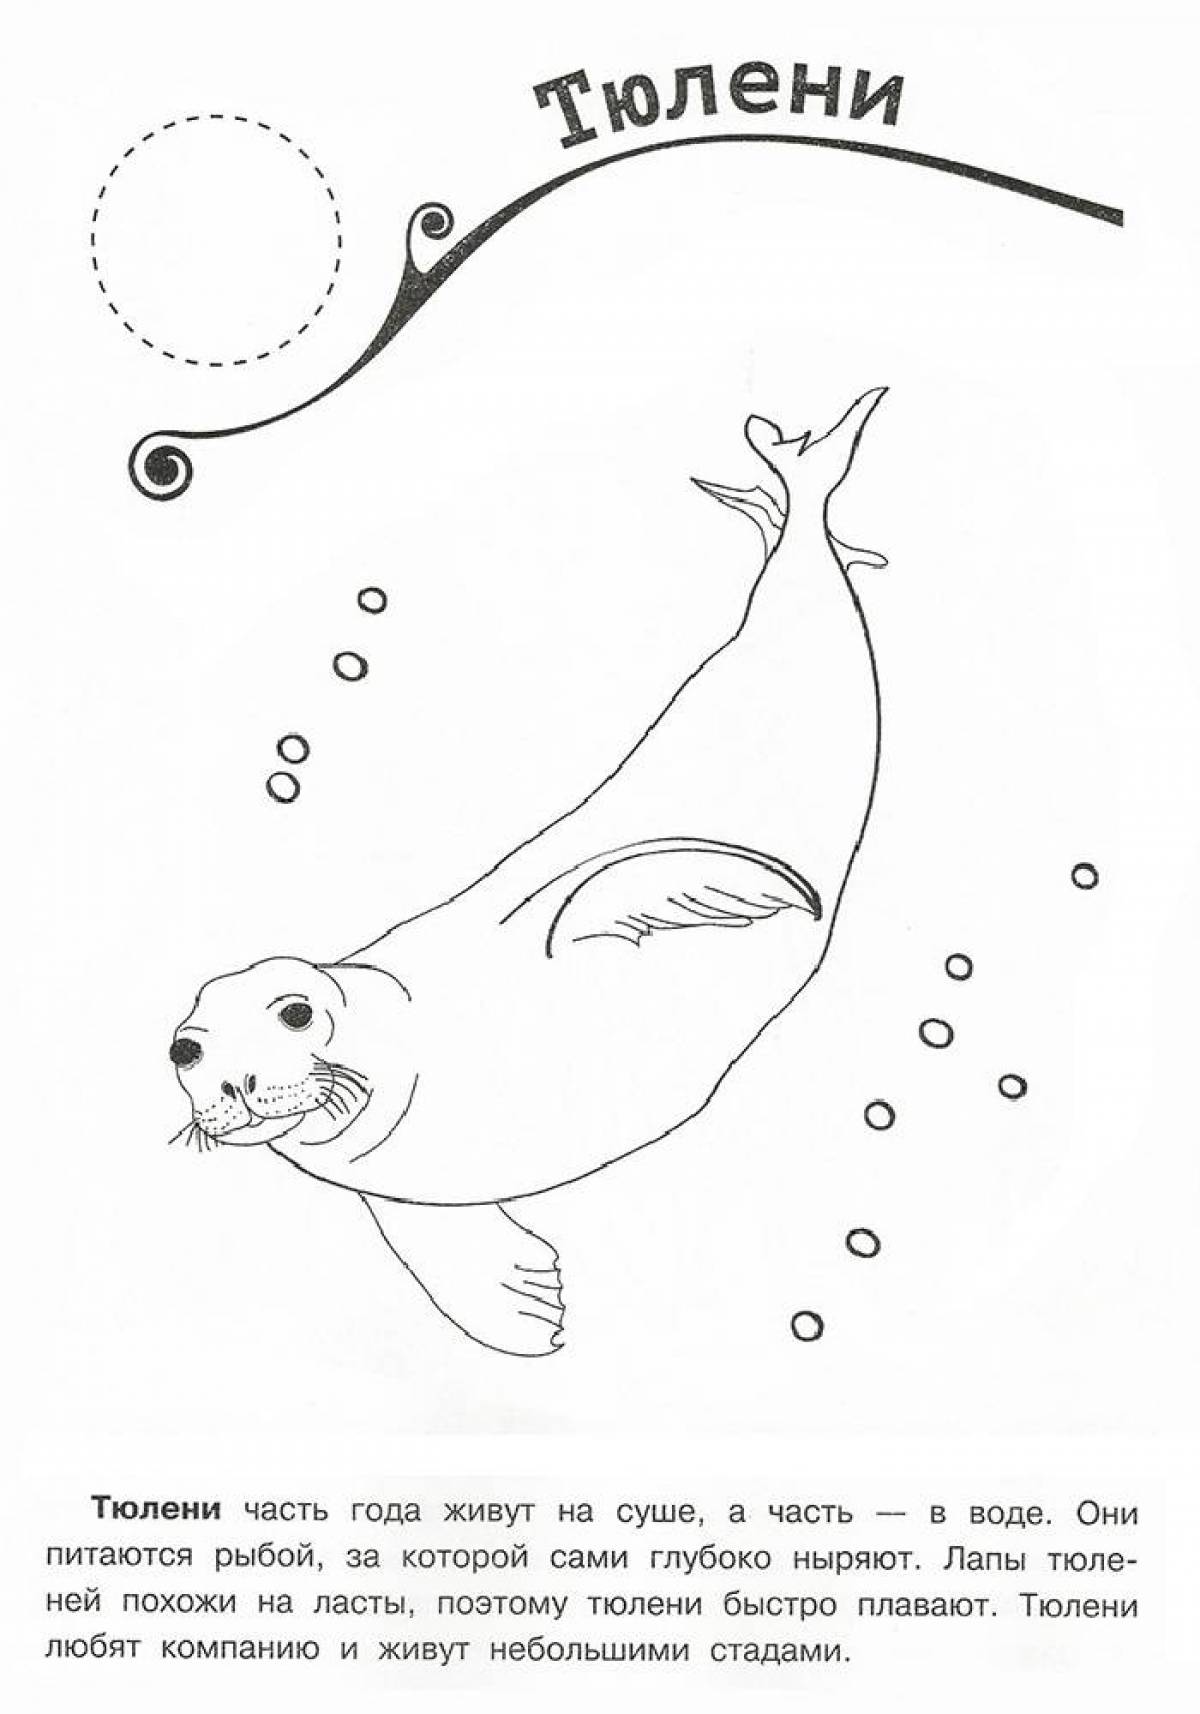 Fun seal coloring book for kids